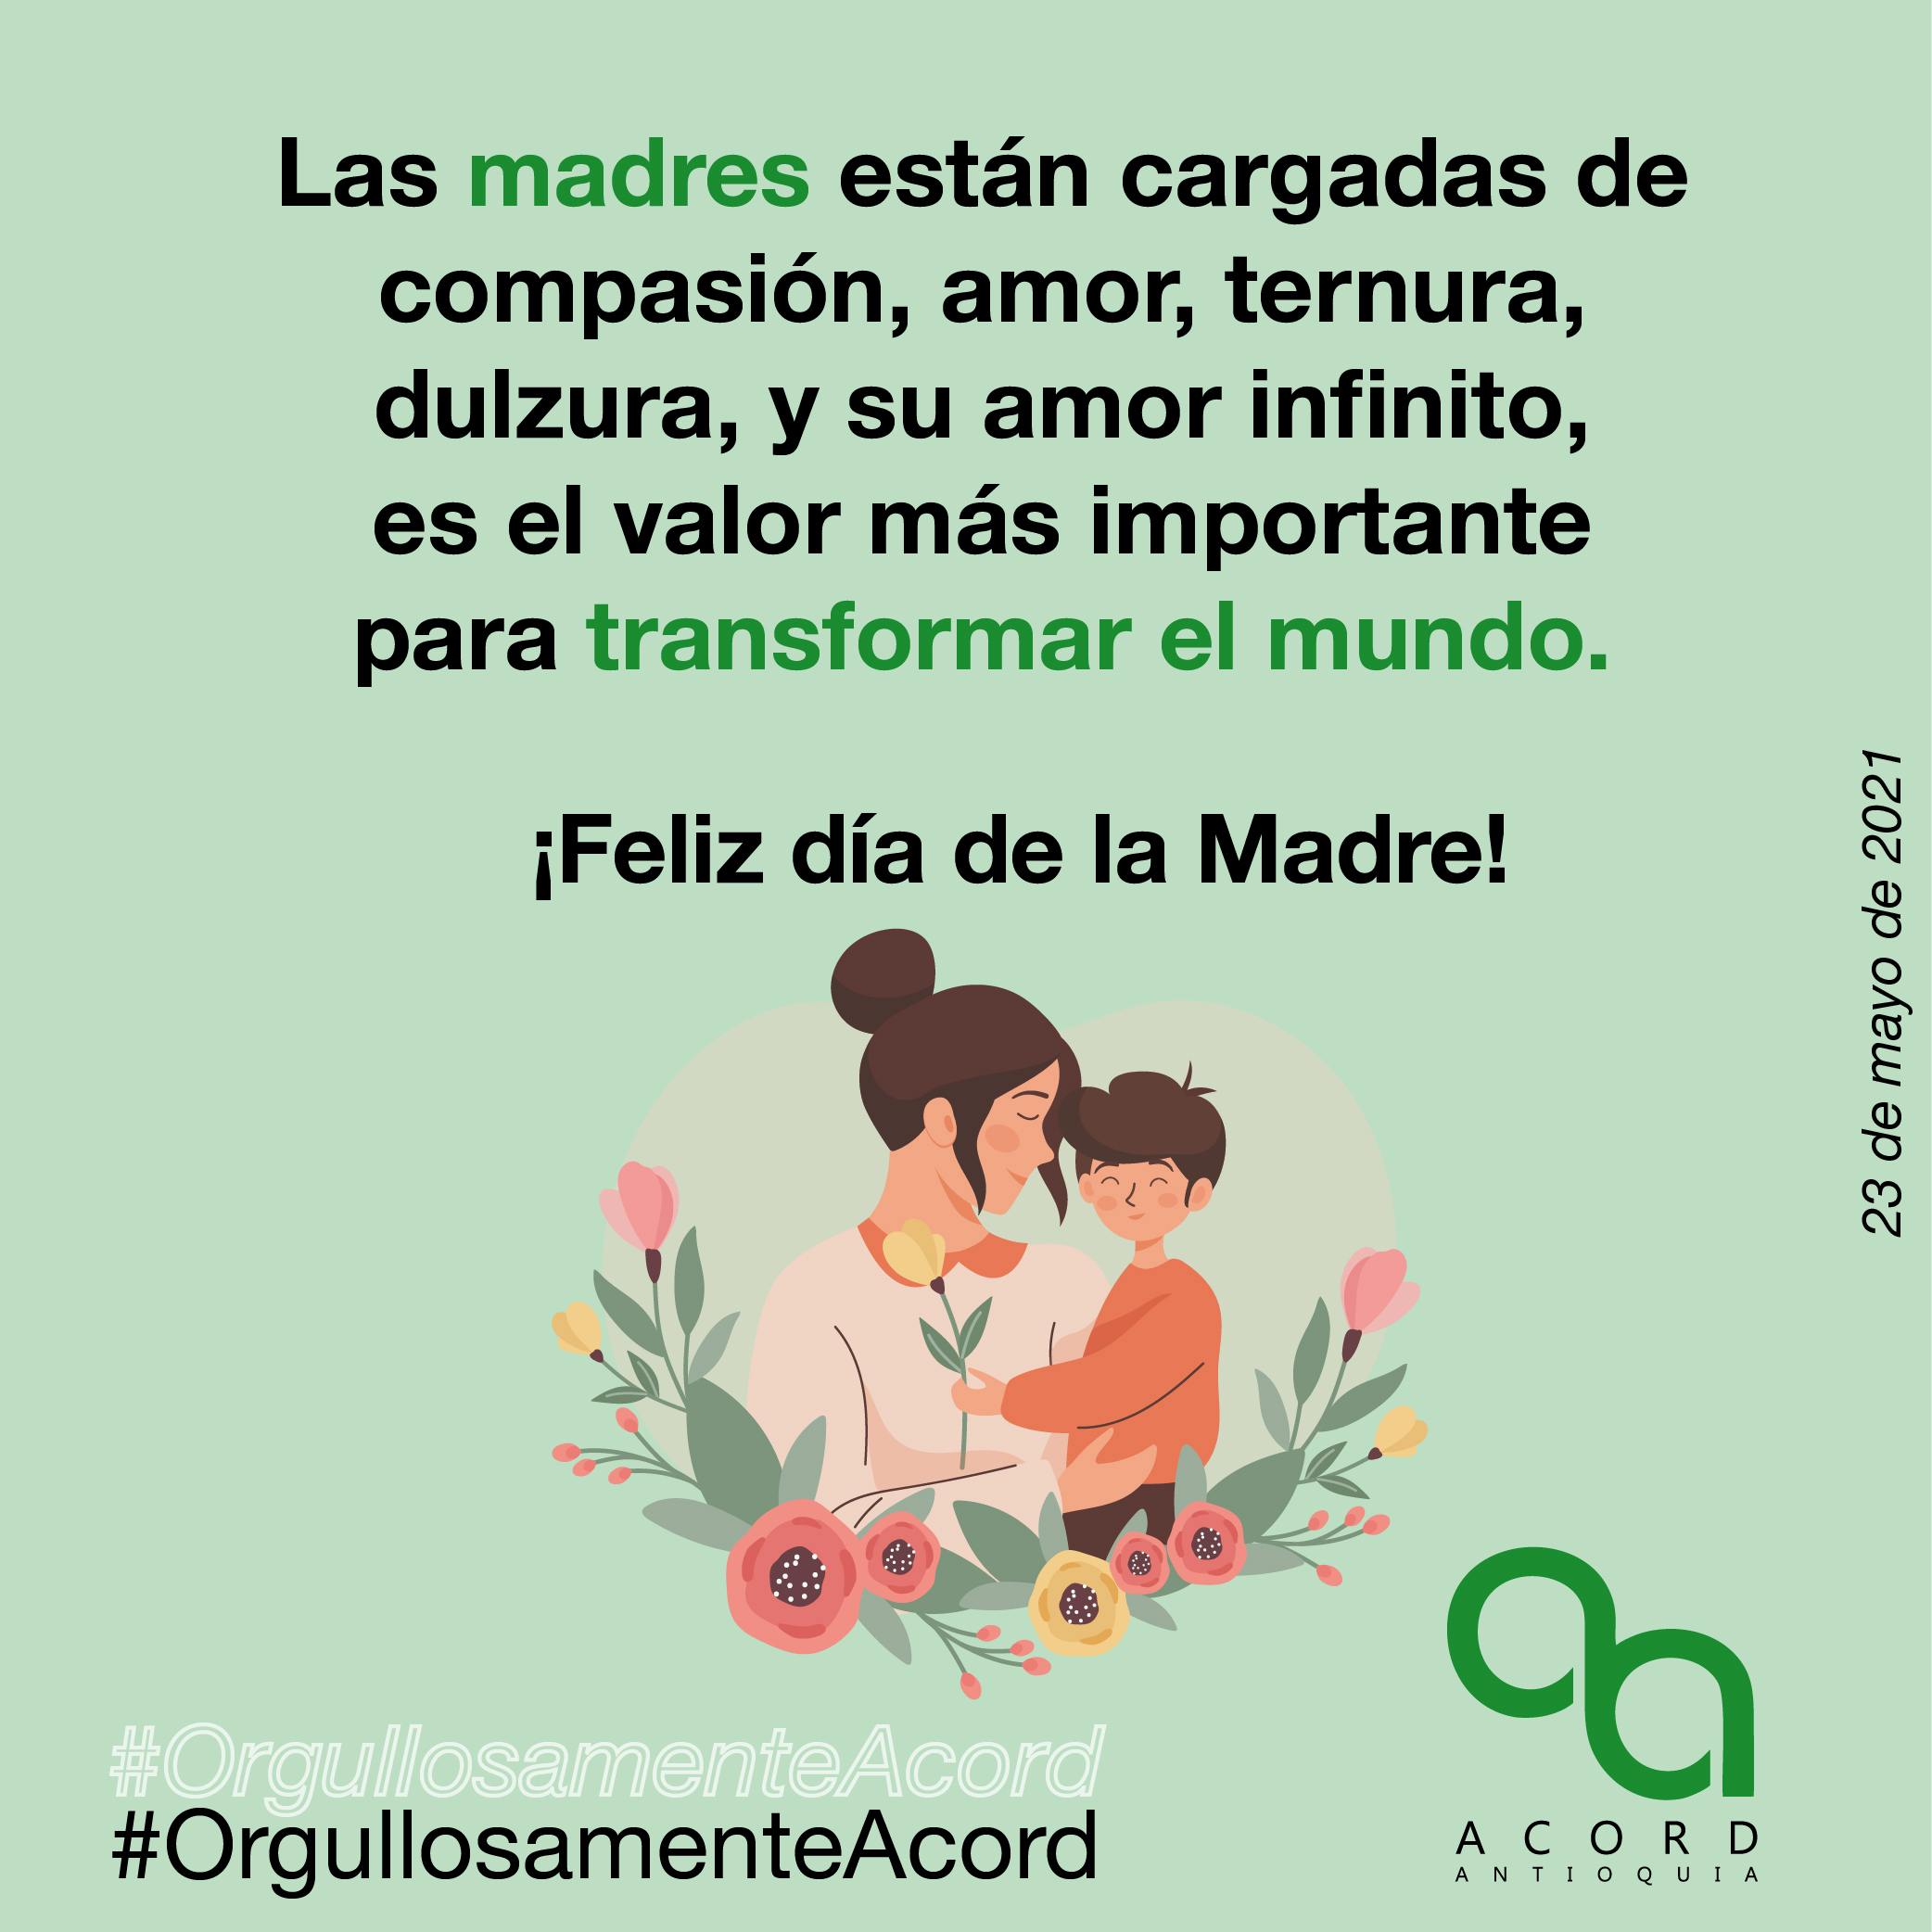 https://www.acordantioquia.com/wp-content/uploads/2021/05/Día-de-la-Madre-01.jpg